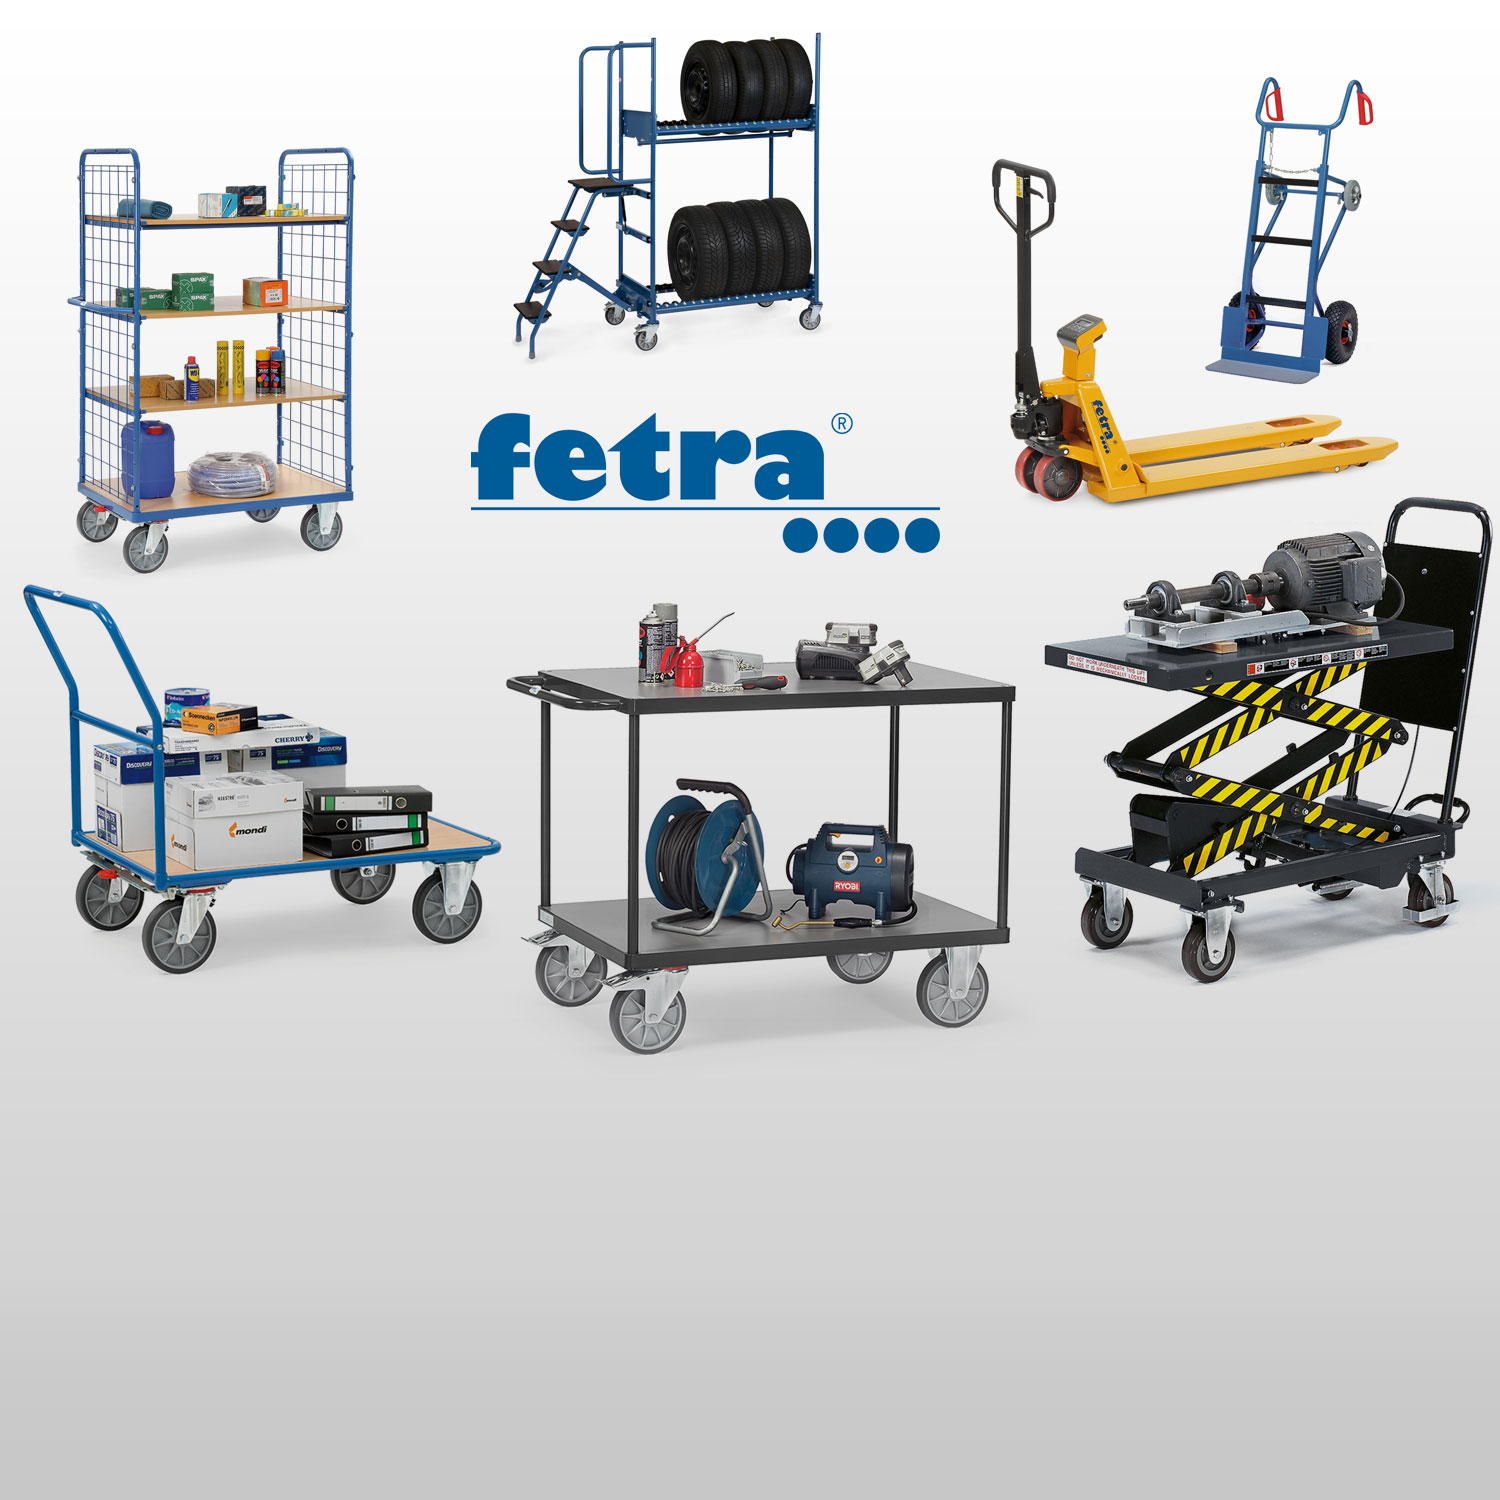 Fetra-Teaser-Spezialshops